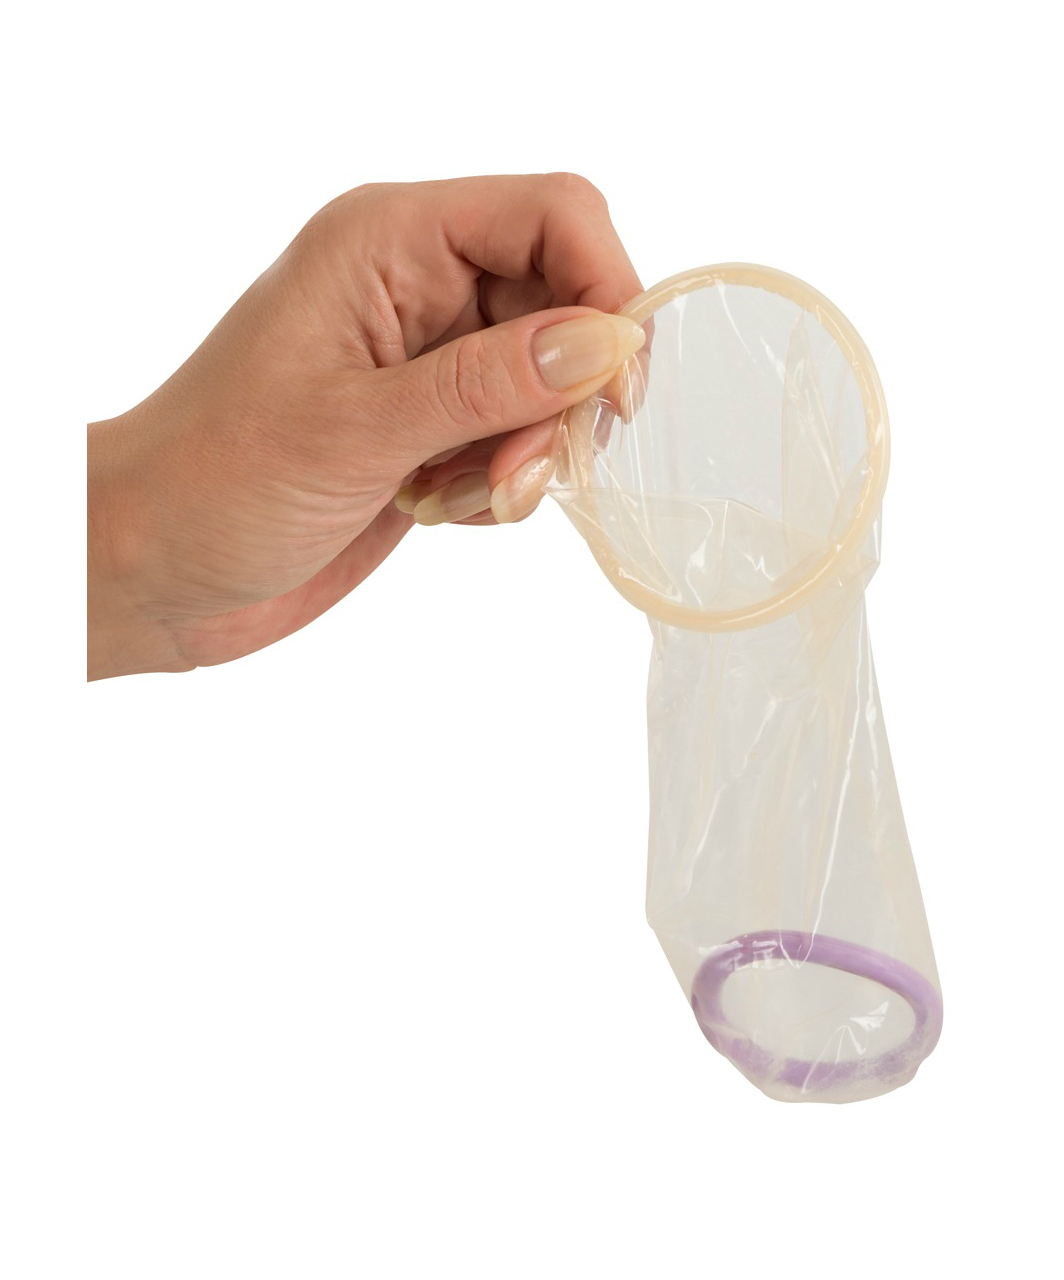 Ormelle Female Condoms (5 pcs)